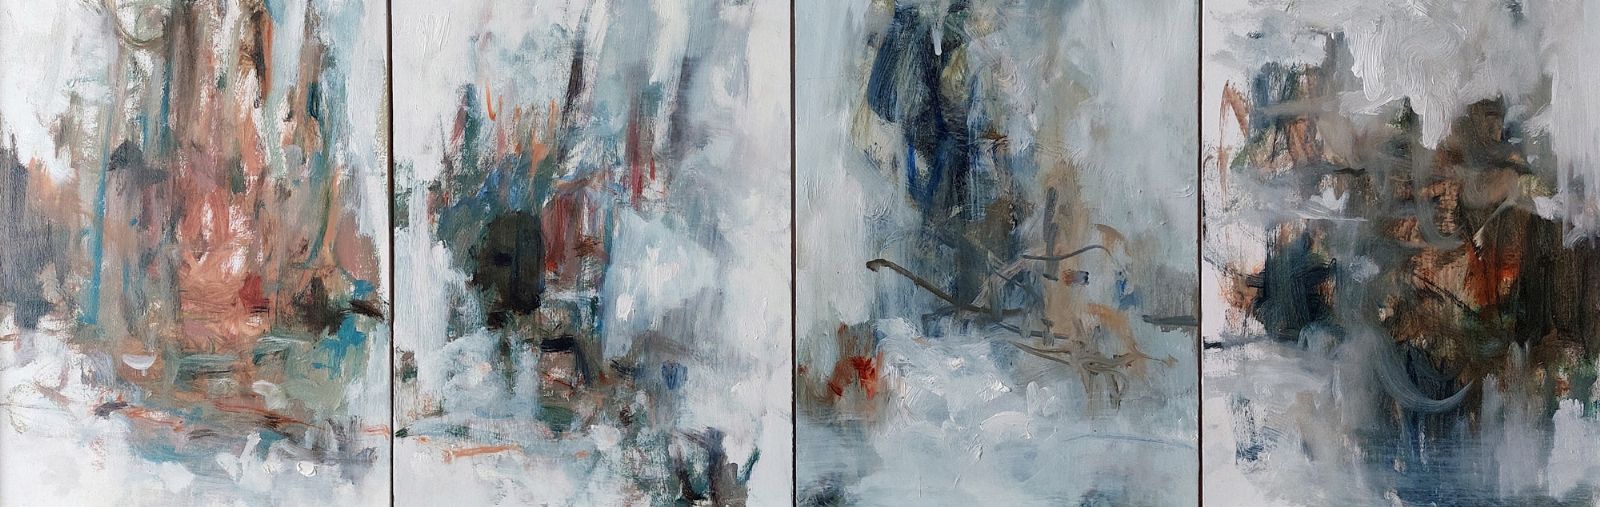 Derek Fitzpatrick - Winter Trees in Four Panels